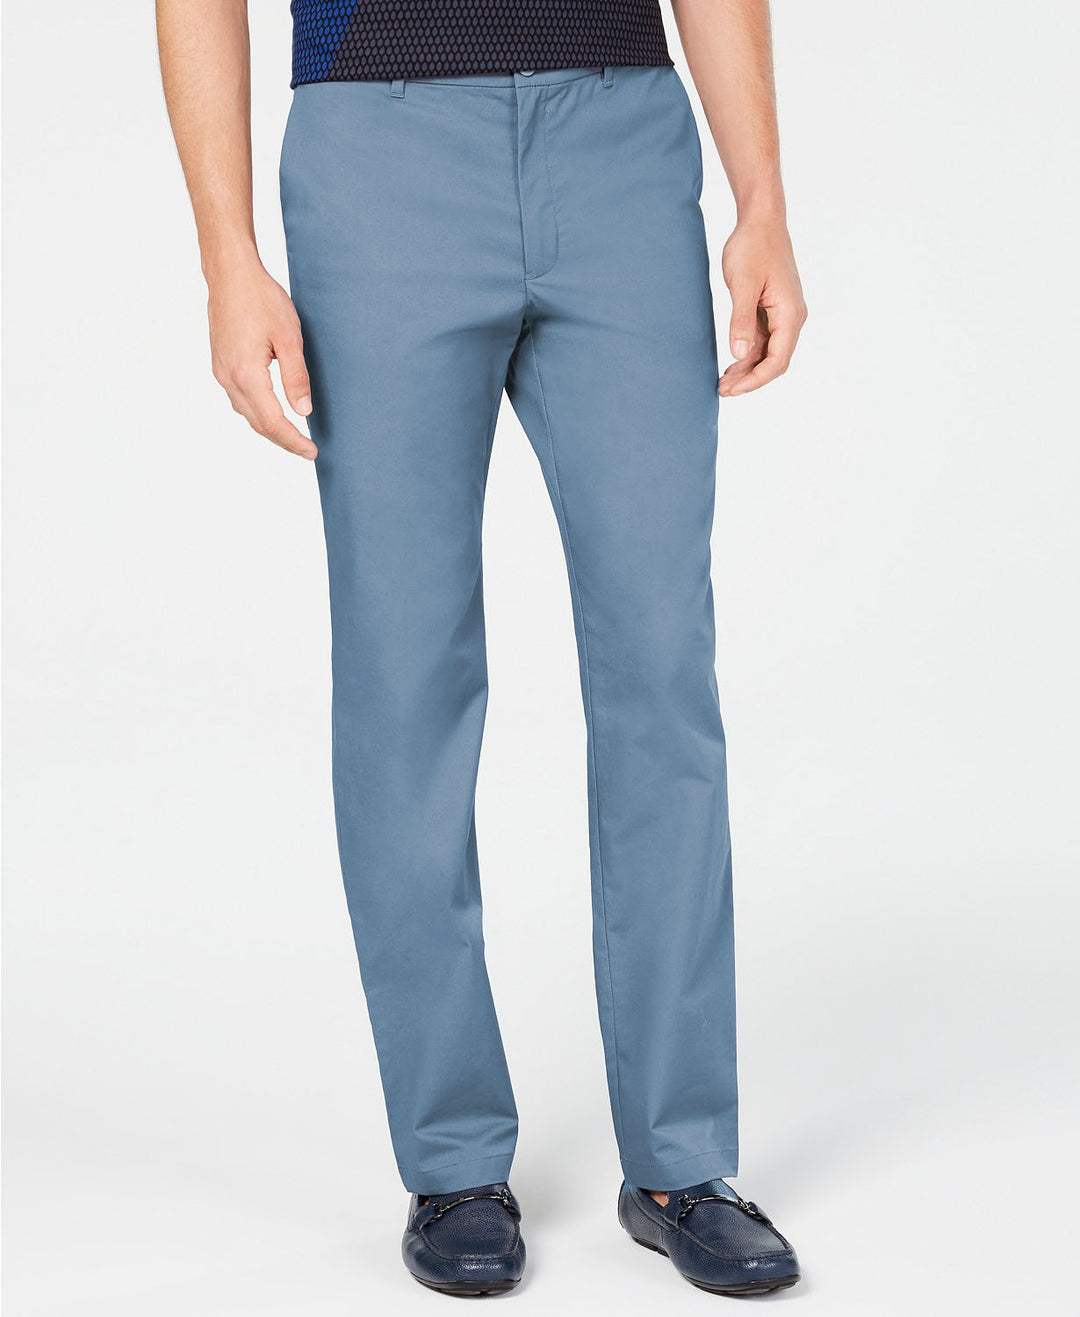 Alfani Men's AlfaTech Classic Fit Chino Pants Blue Size 38x32